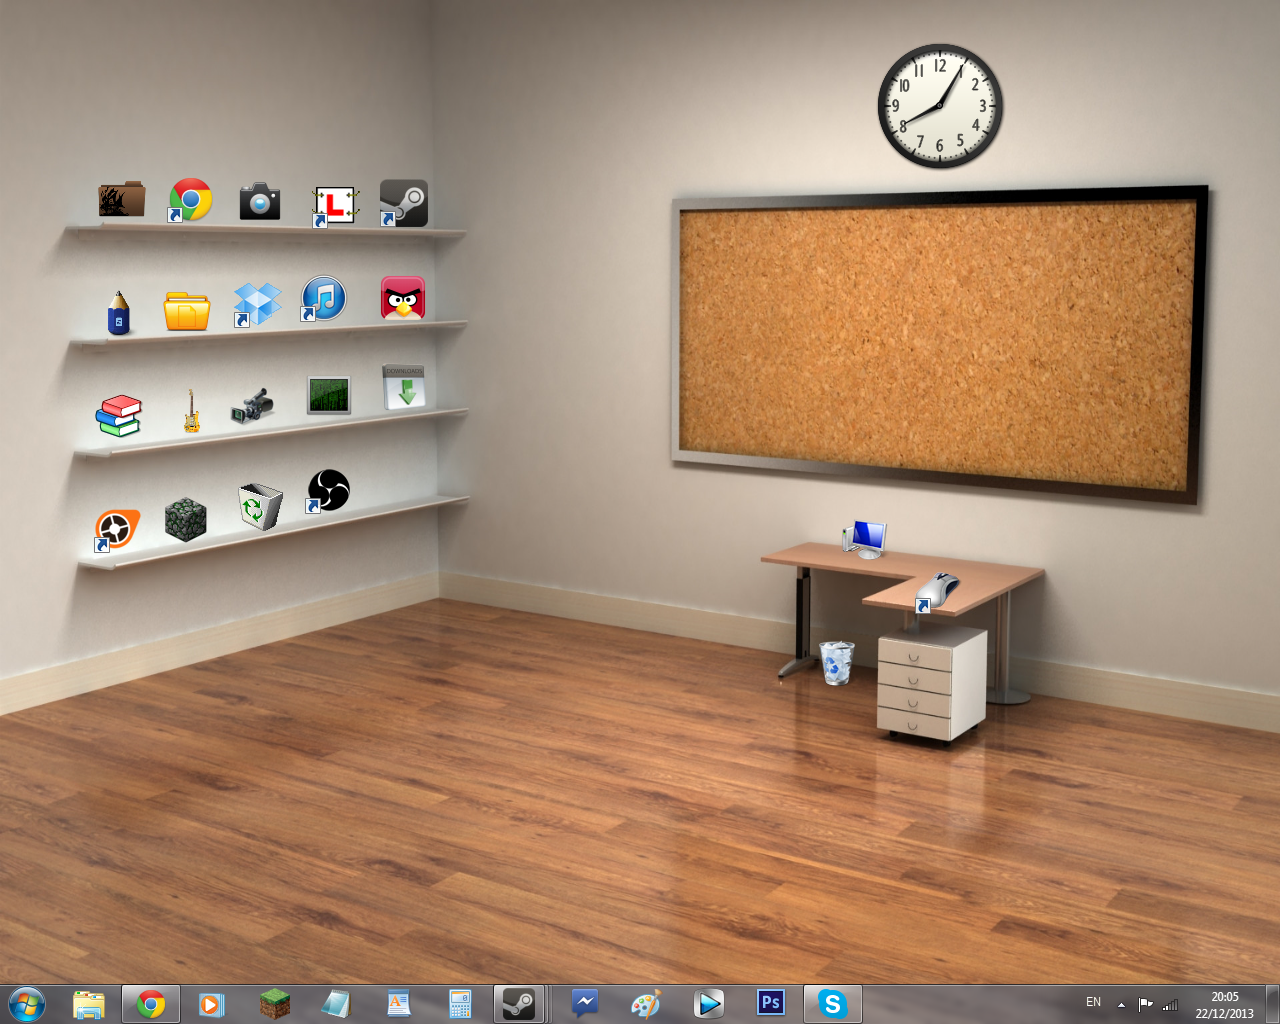 My desktop after seeing that sweet game shelf background. : gaming